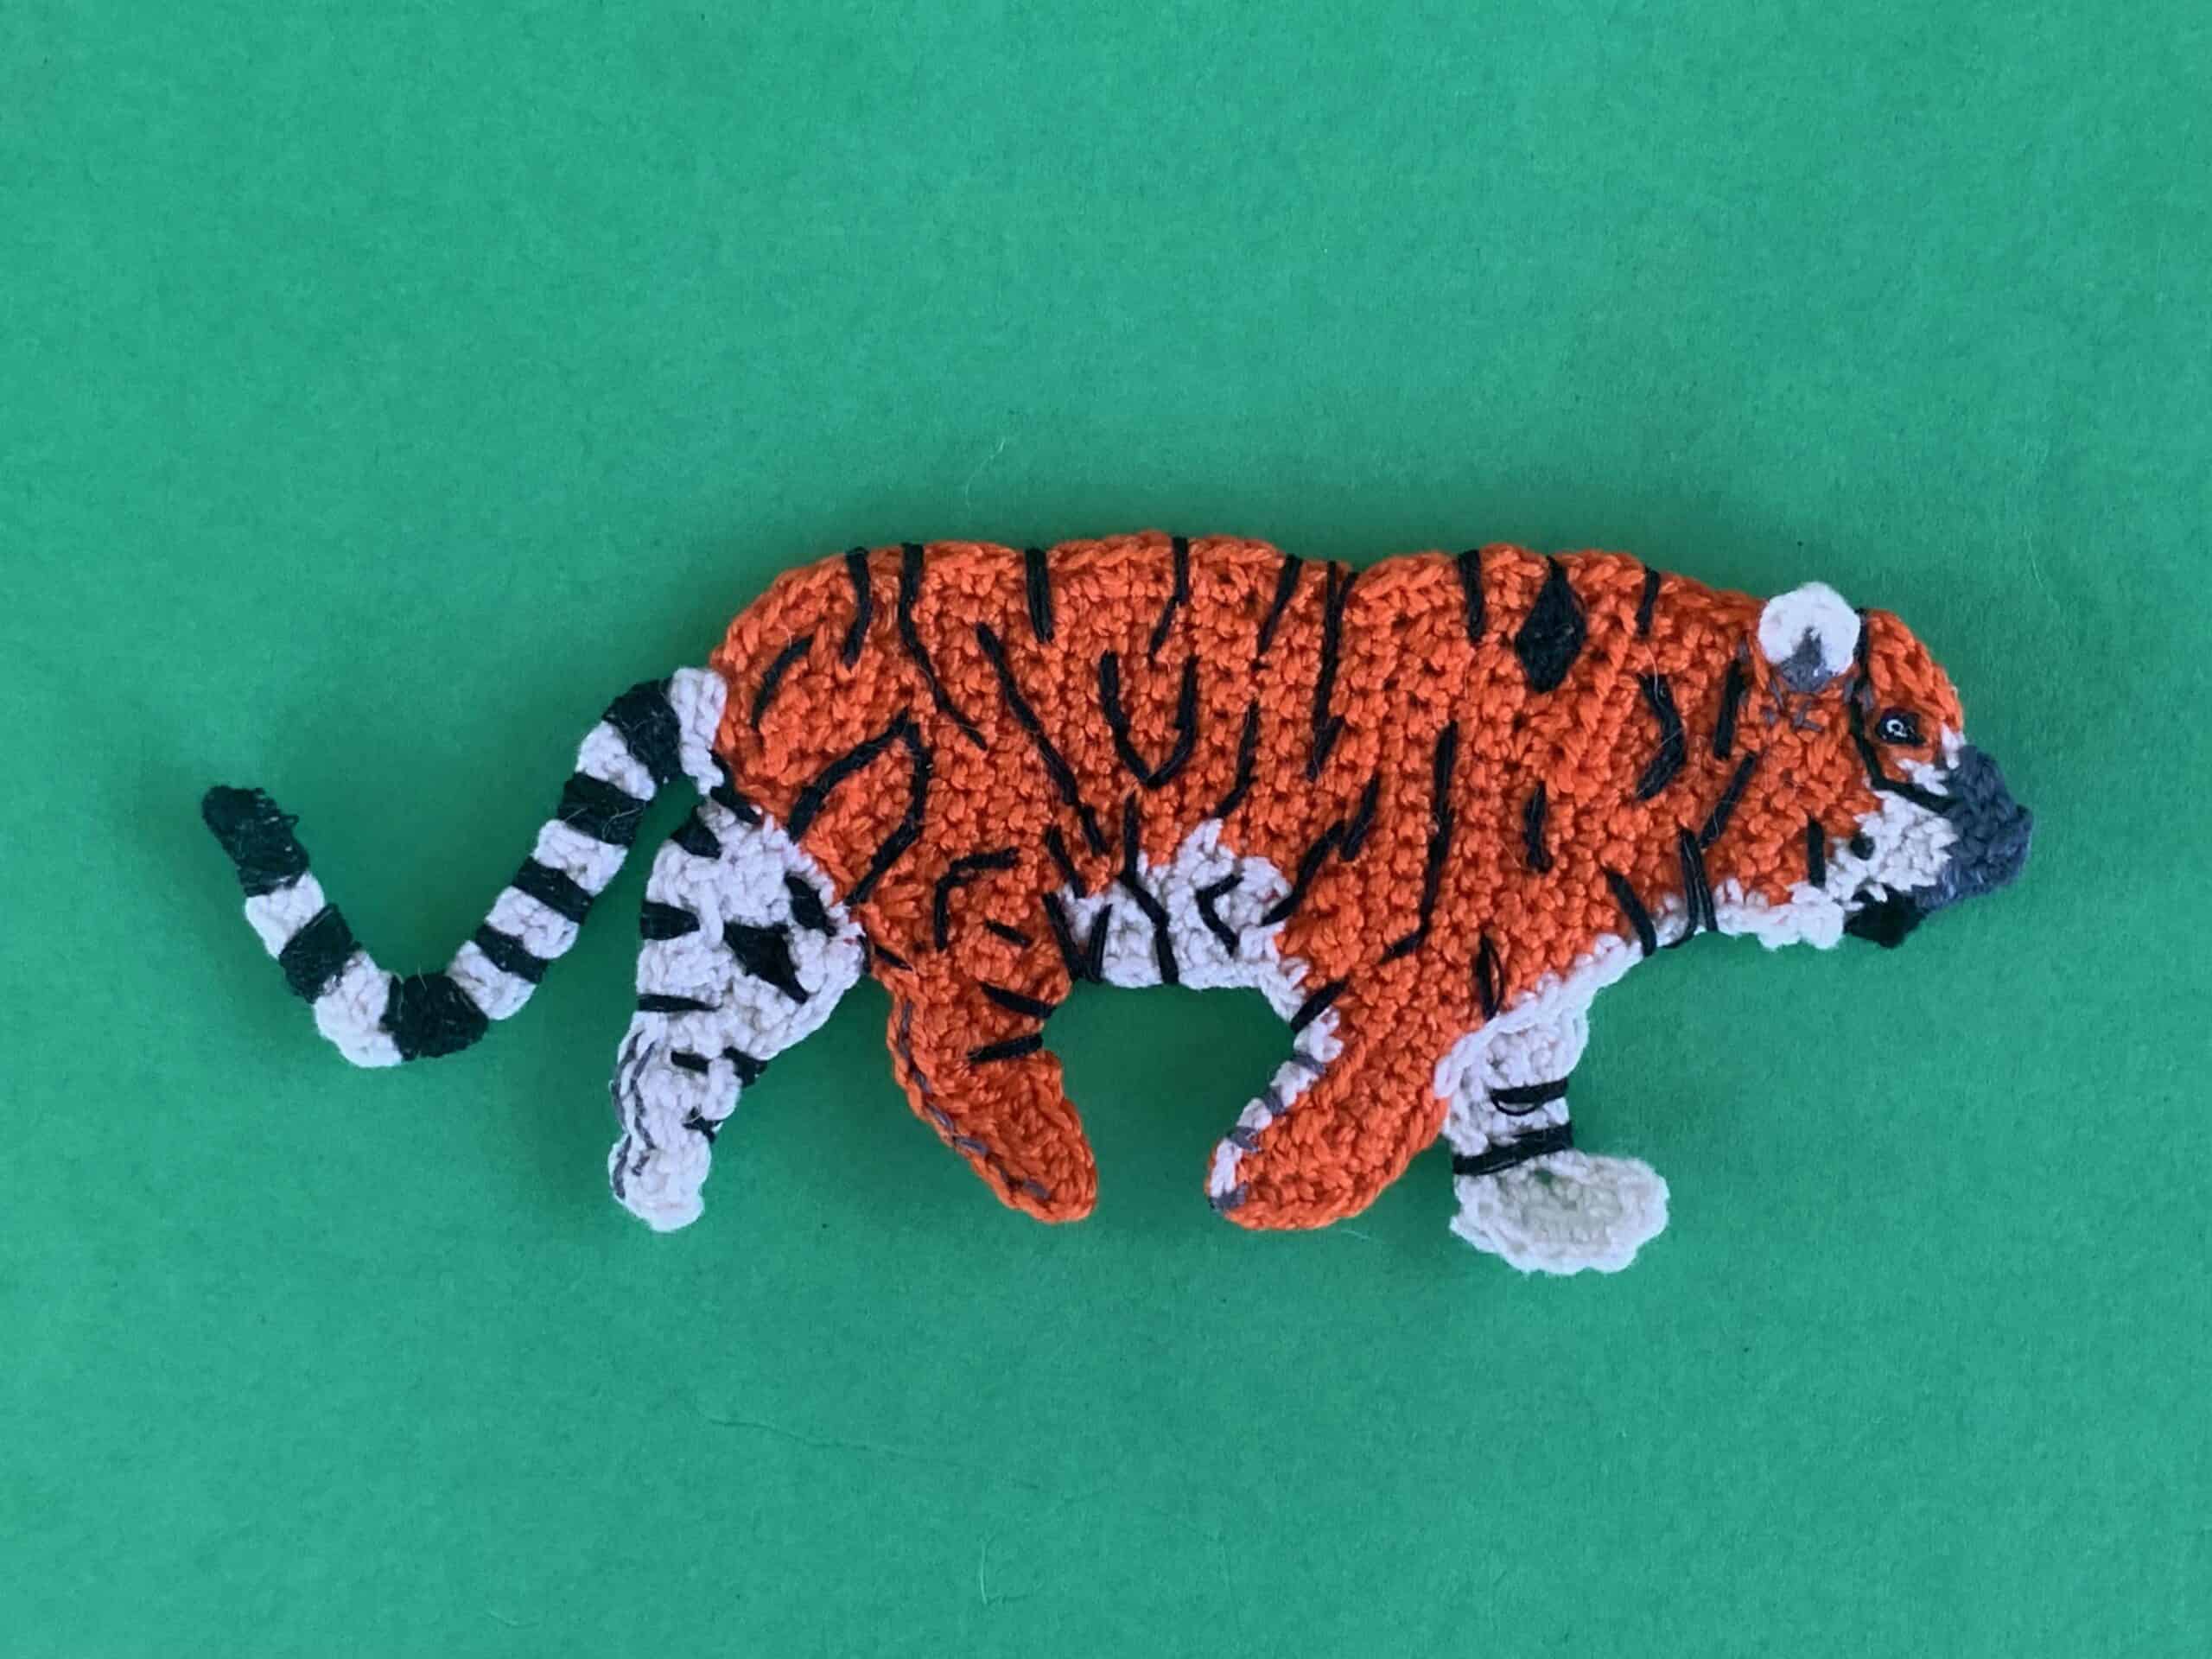 Finished crochet tiger 4 ply landscape